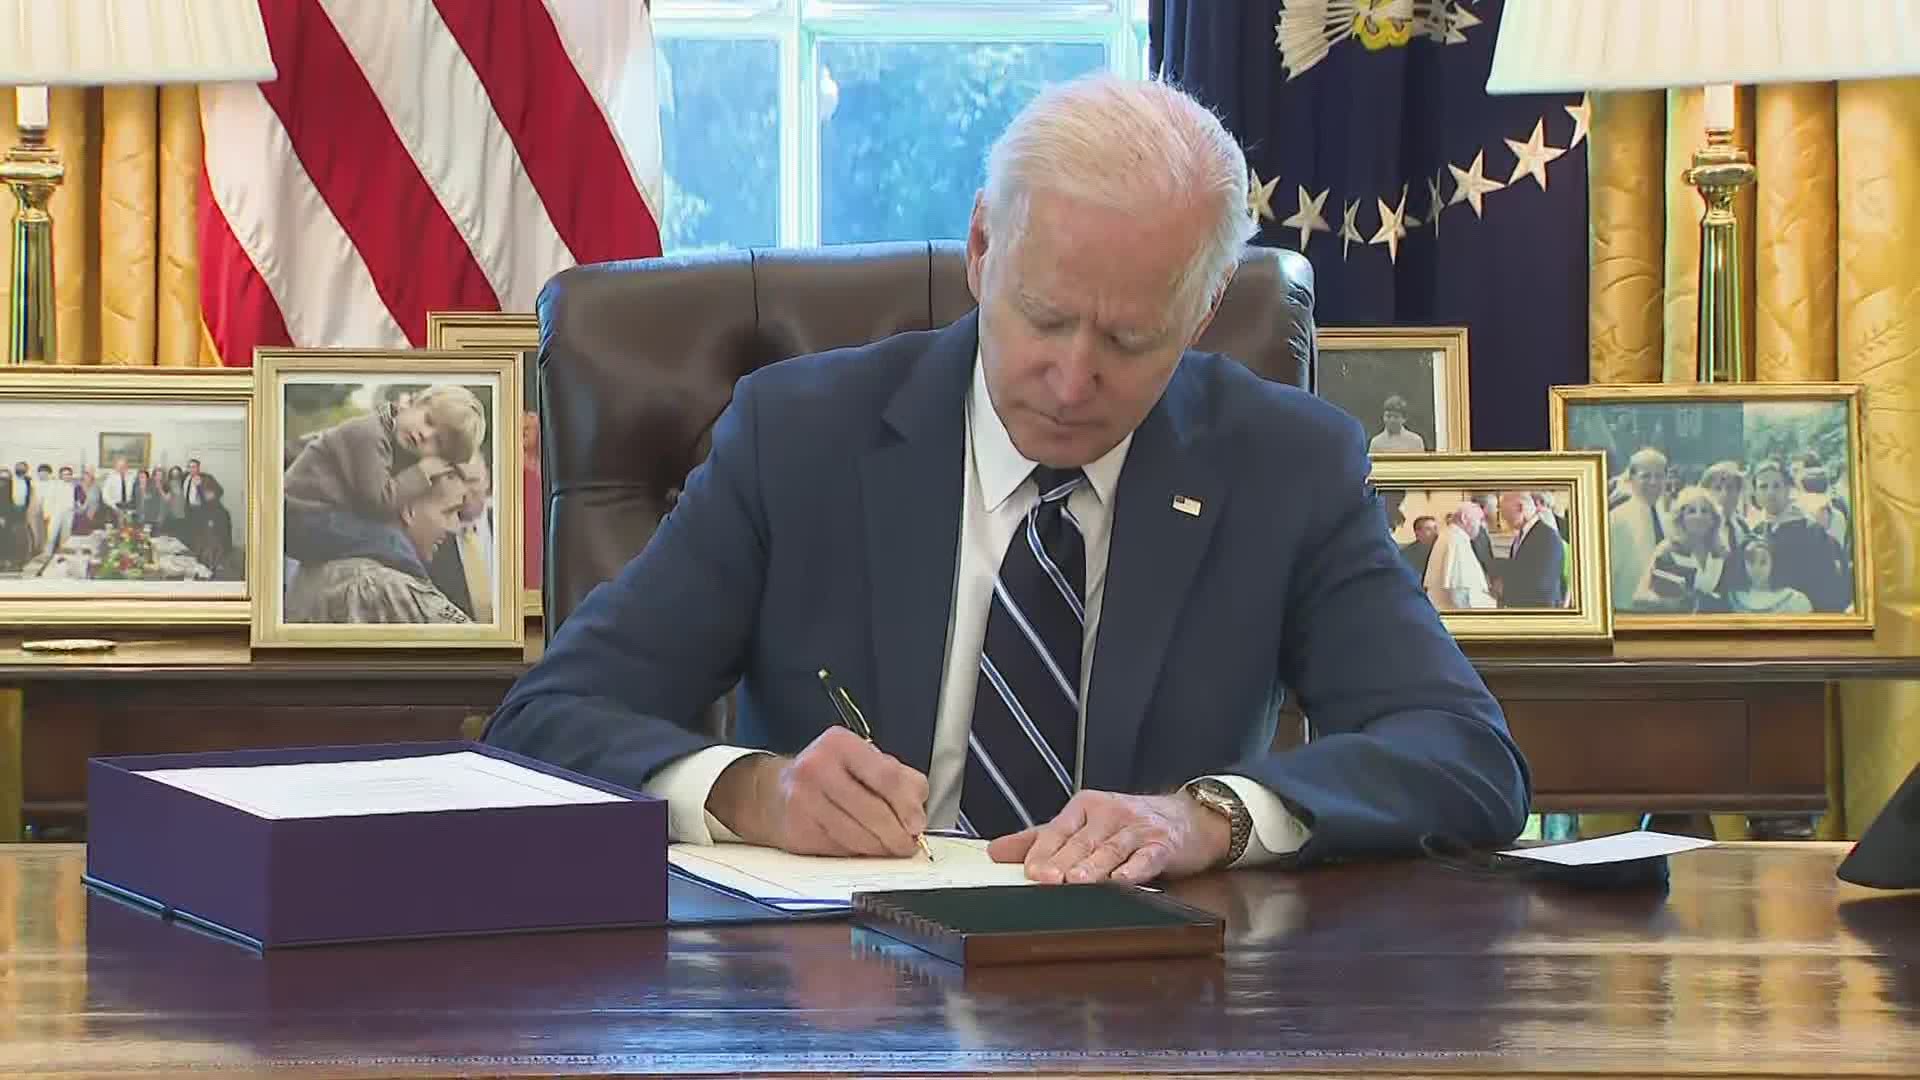 President Joe Biden signed the $1.9 trillion coronavirus relief bill in the oval office Thursday.